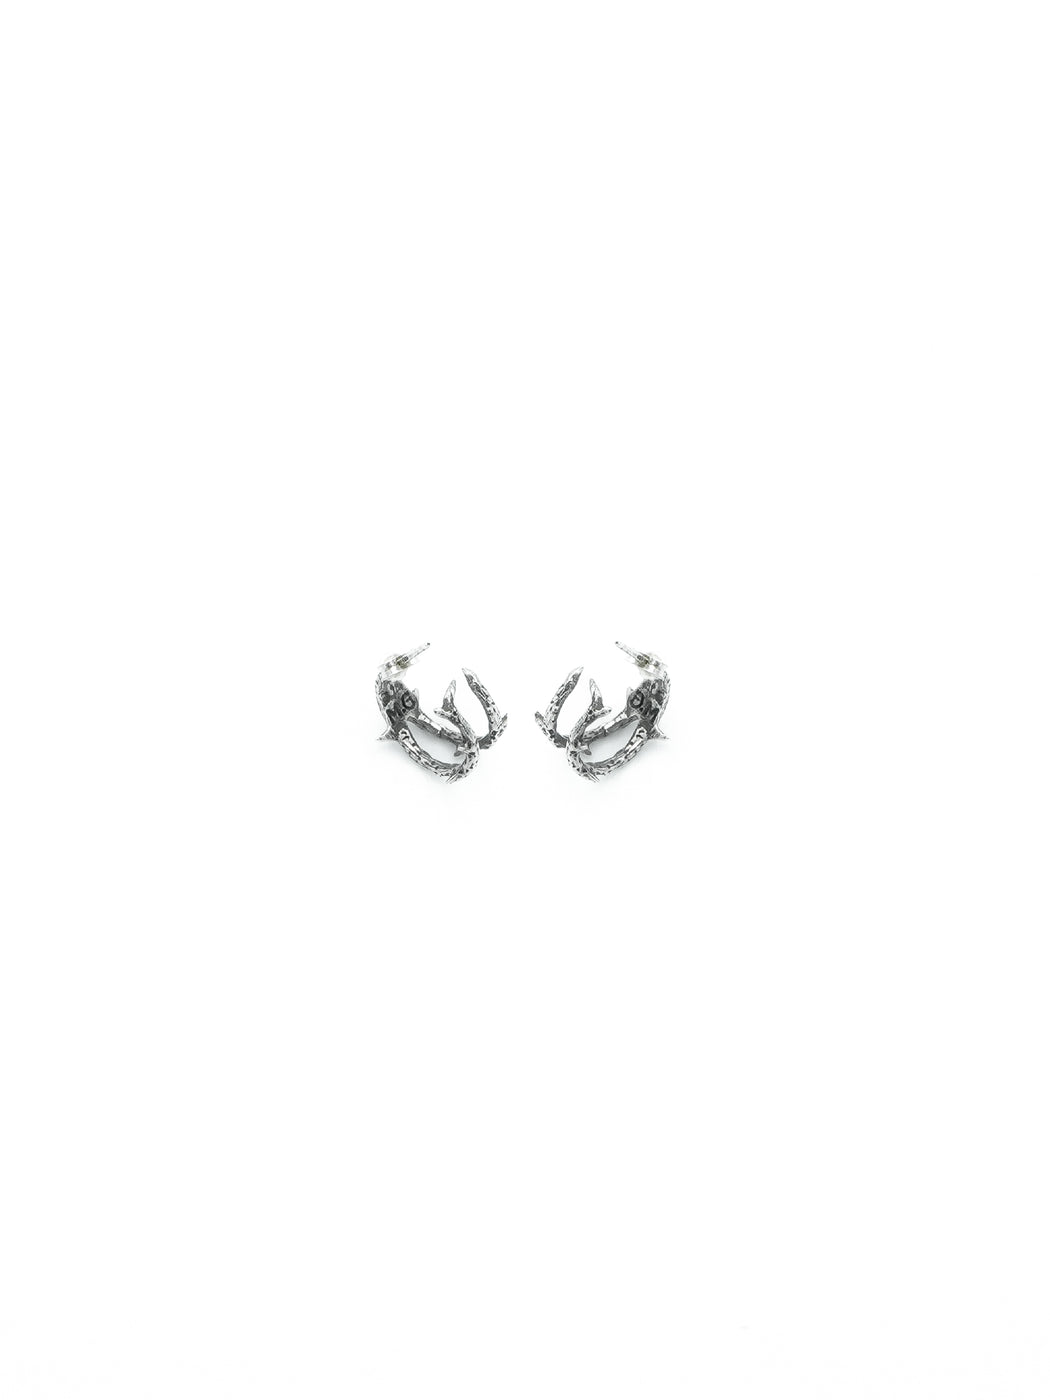 Small brambles earrings